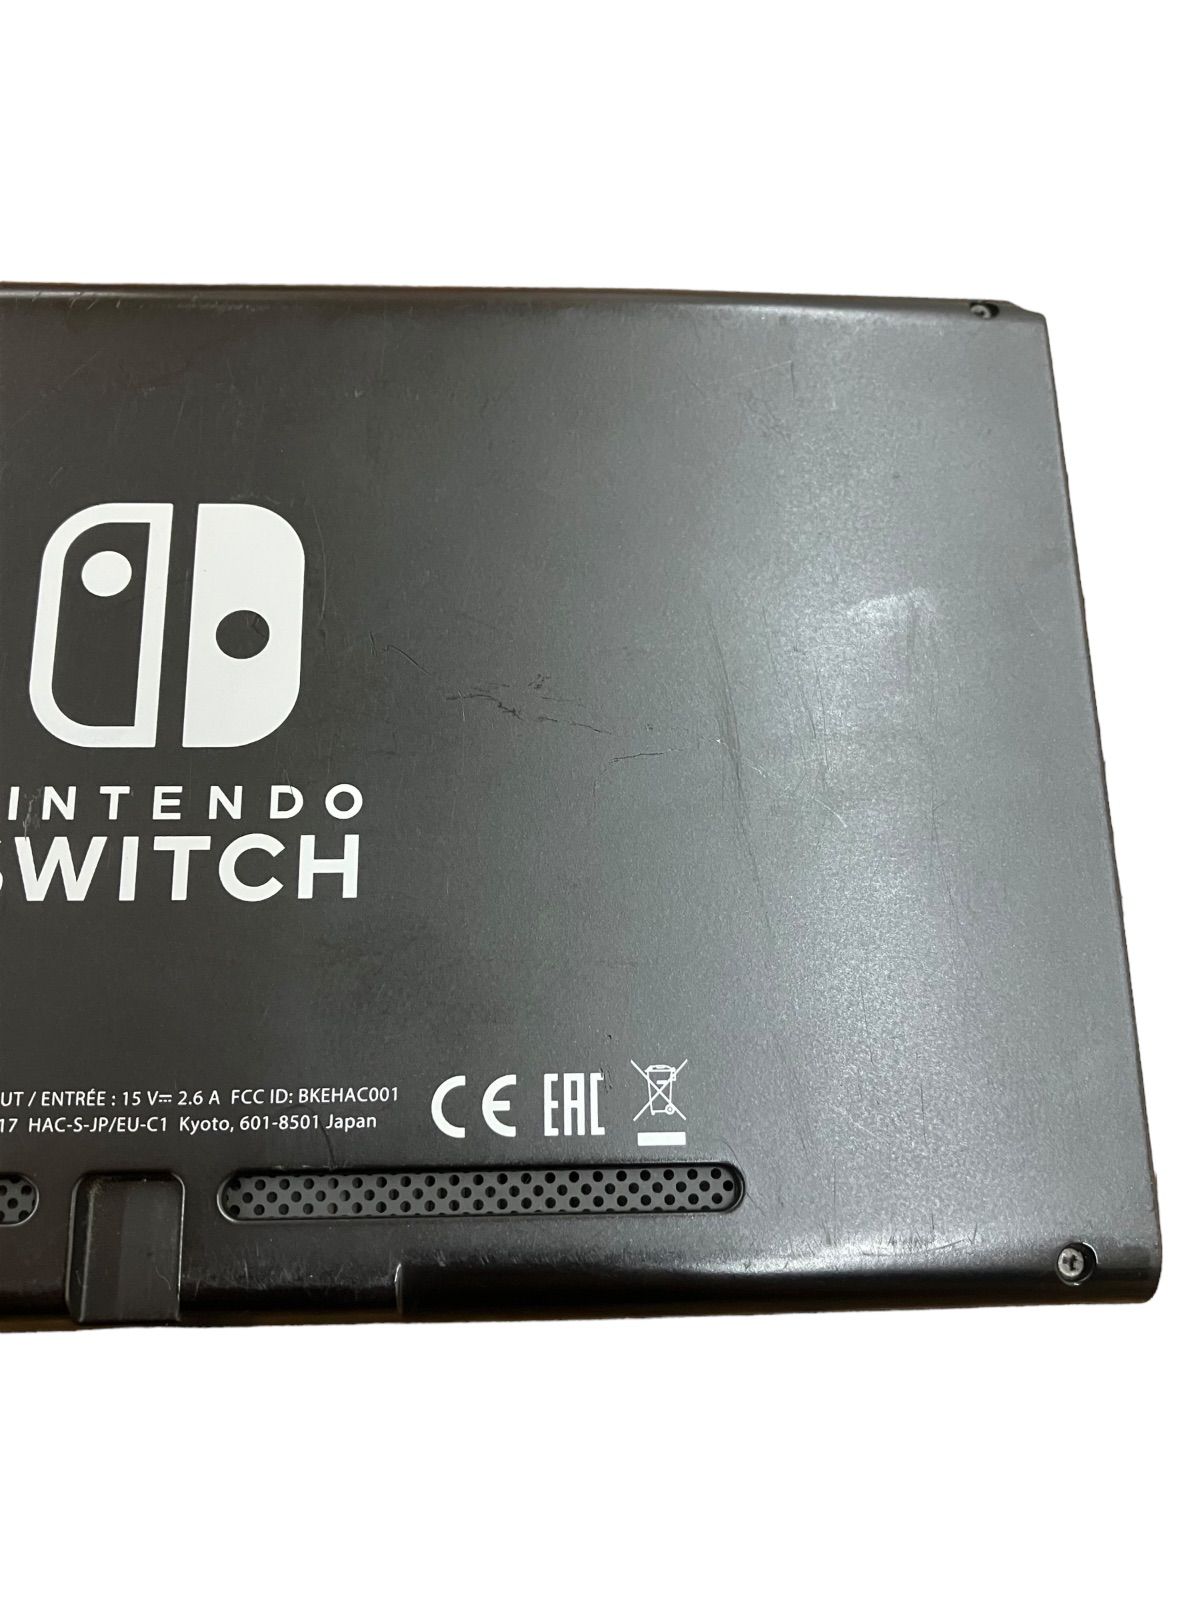 Nintendo Switch ニンテンドースイッチ 本体のみ 旧型 HAC-001 稼動品